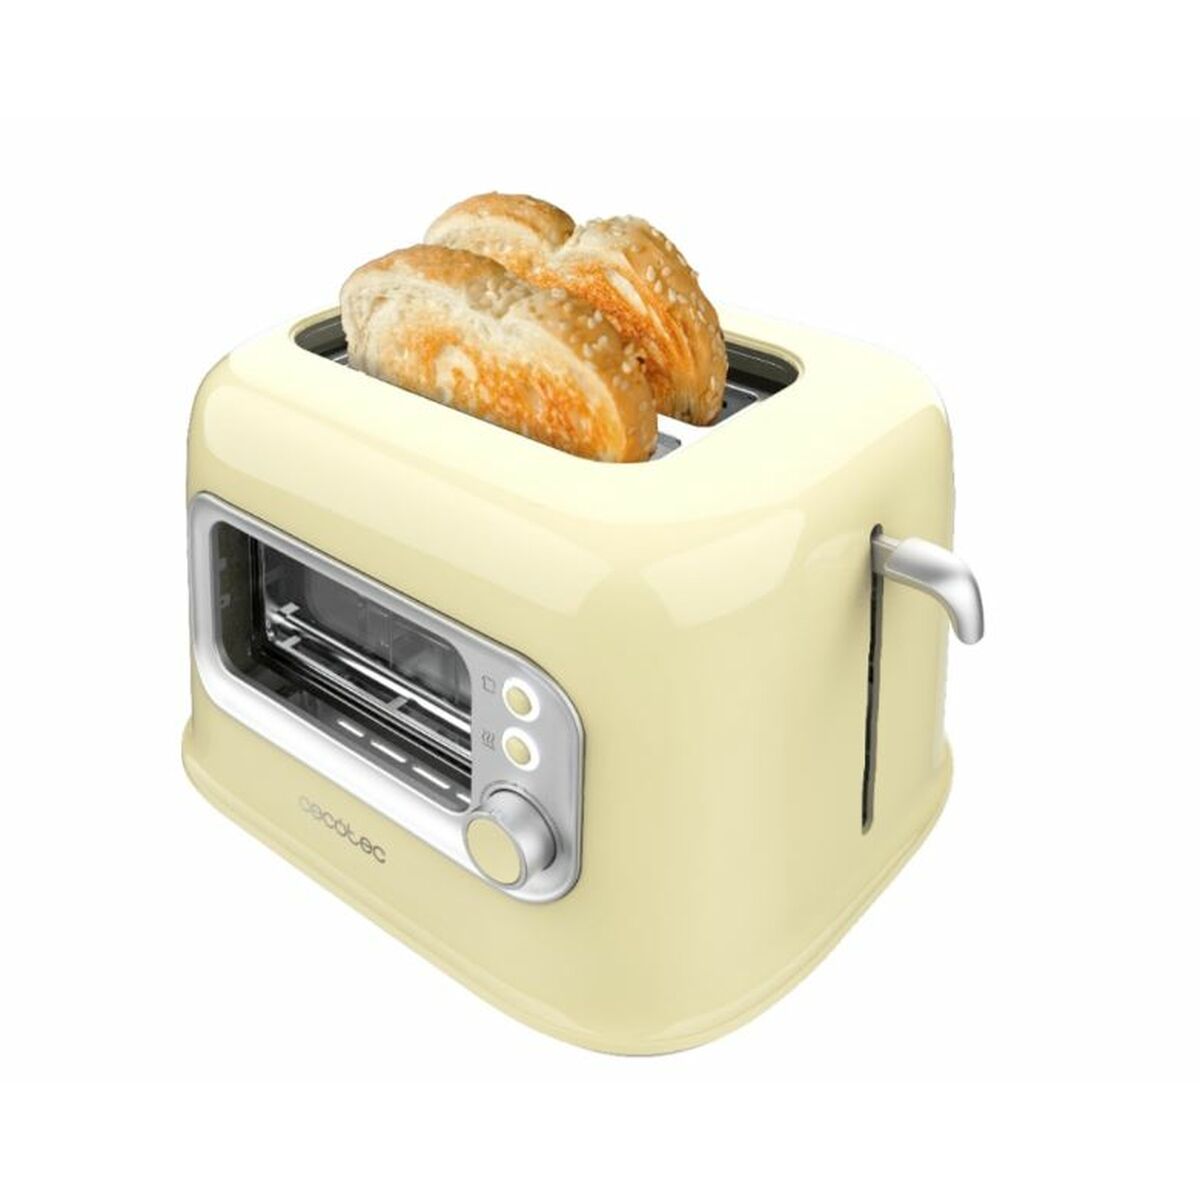 Toaster Cecotec RetroVision 700 W - CA International 